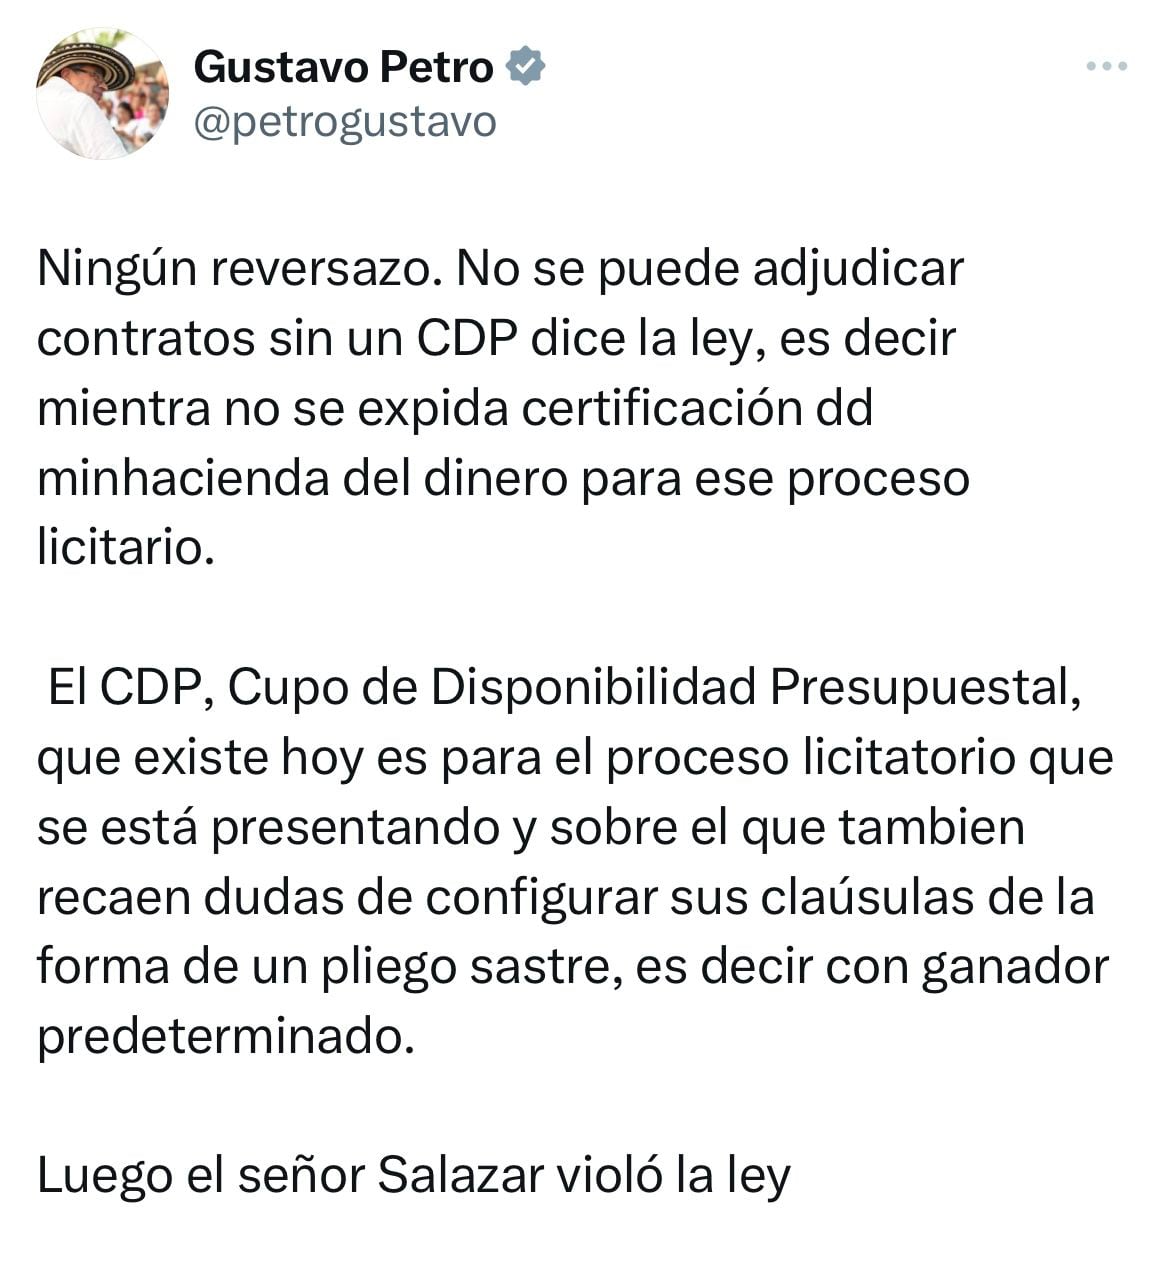 Mensaje presidente Gustavo Petro